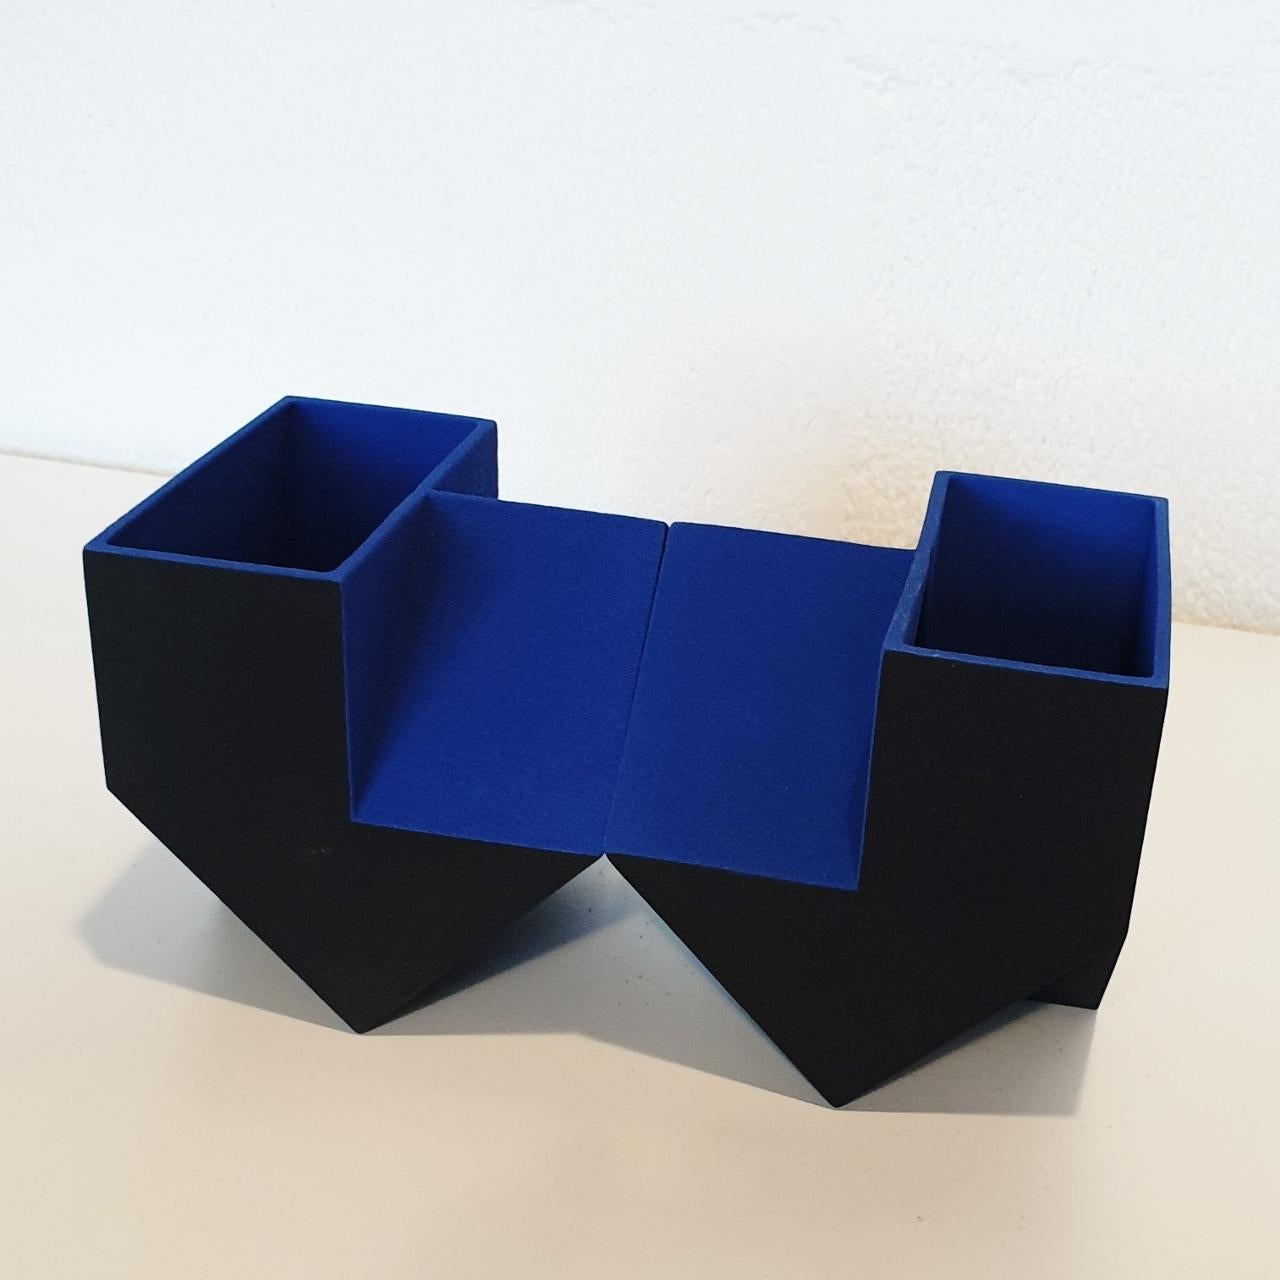 SC1403 blue - contemporary modern abstract geometric ceramic object sculpture - Contemporary Sculpture by Let de Kok